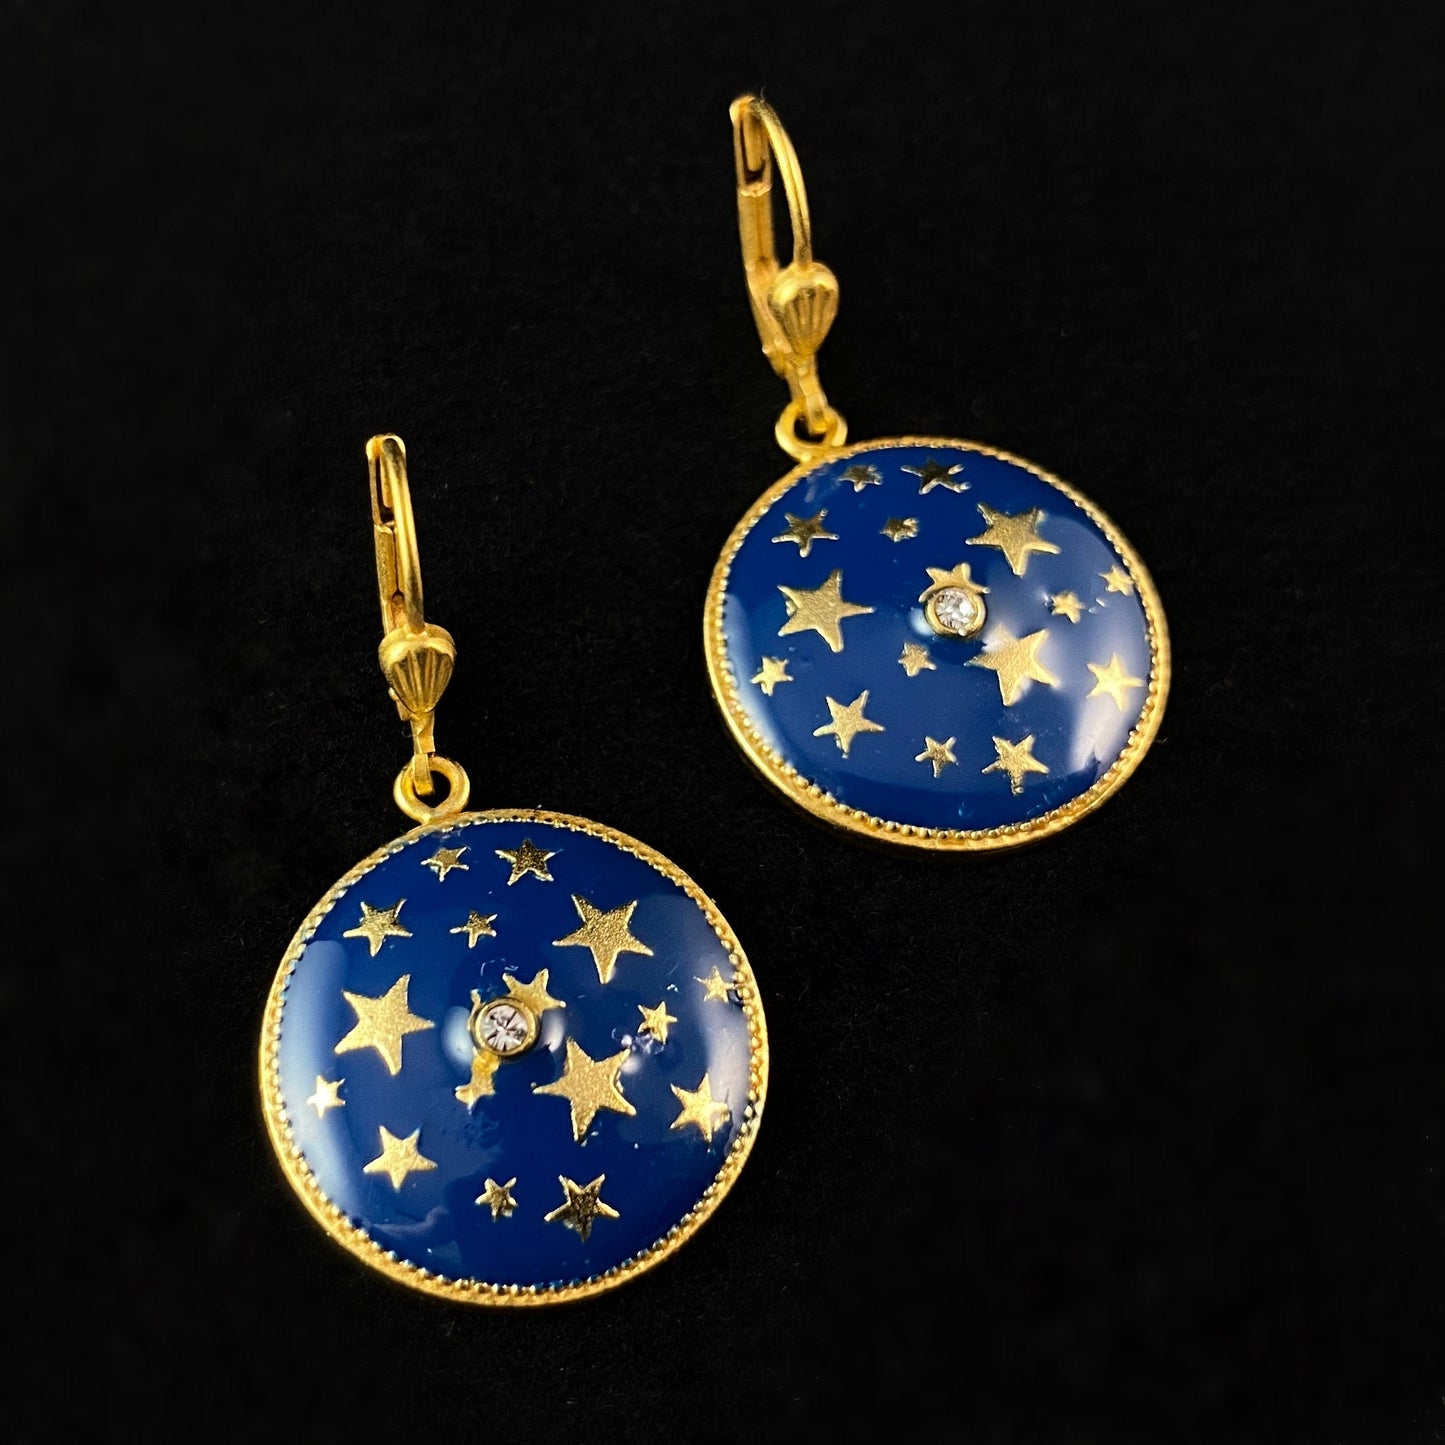 Enamel Star Earrings with Clear Swarovski Crystal - La Vie Parisienne by Catherine Popesco